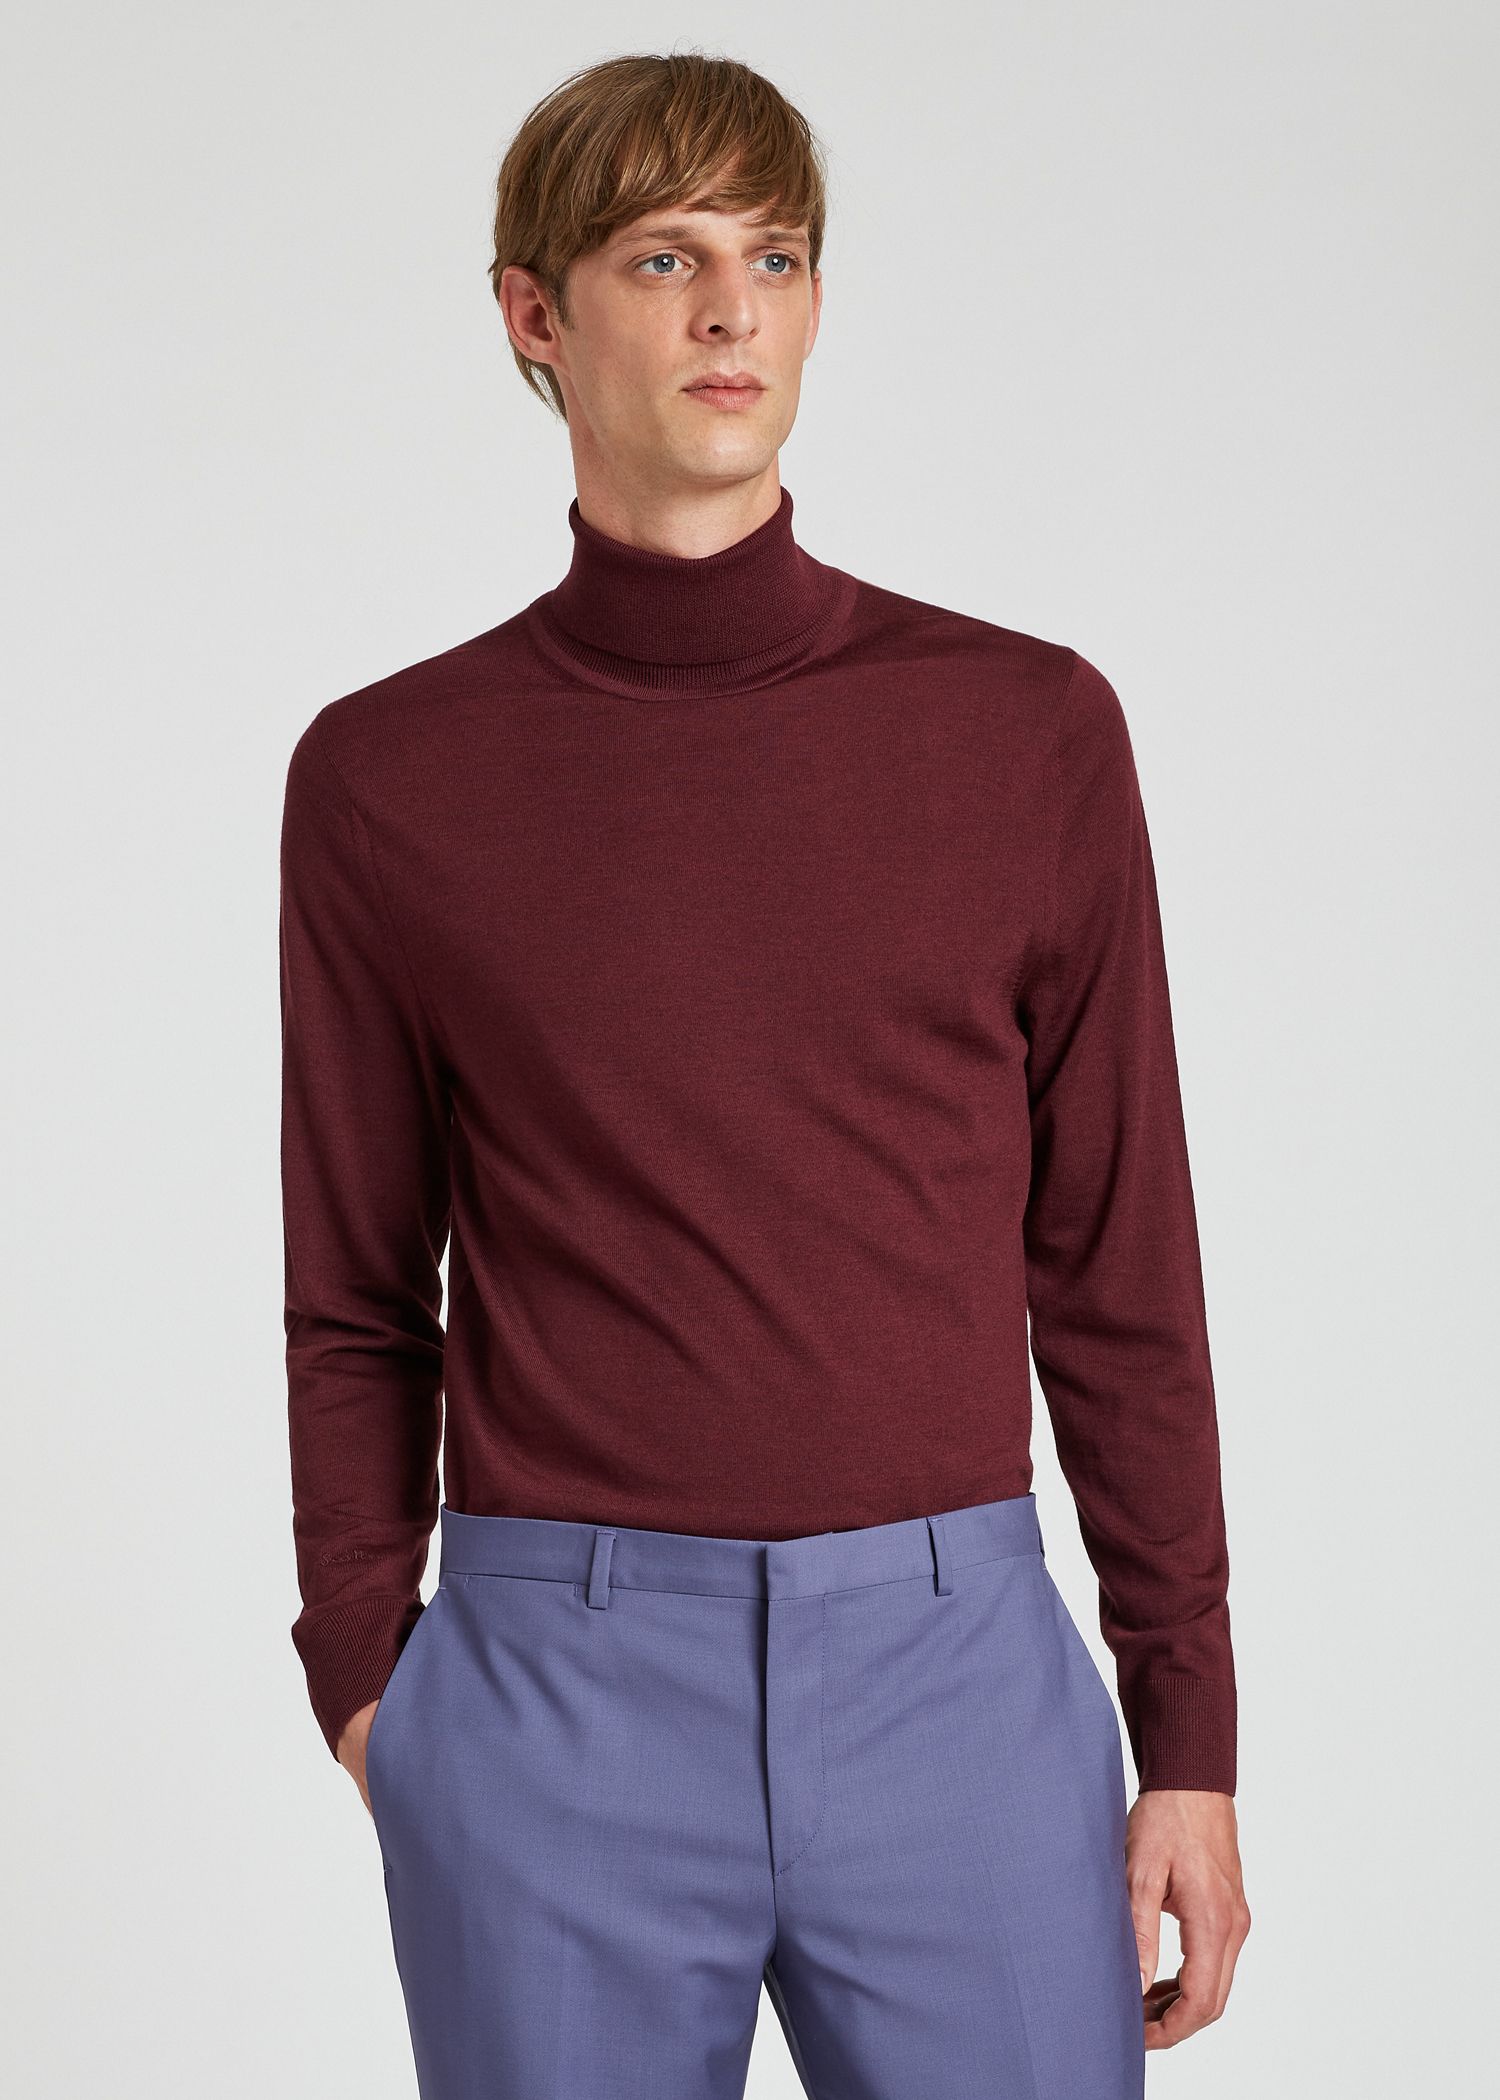 Men's Burgundy Merino Roll-Neck Sweater 